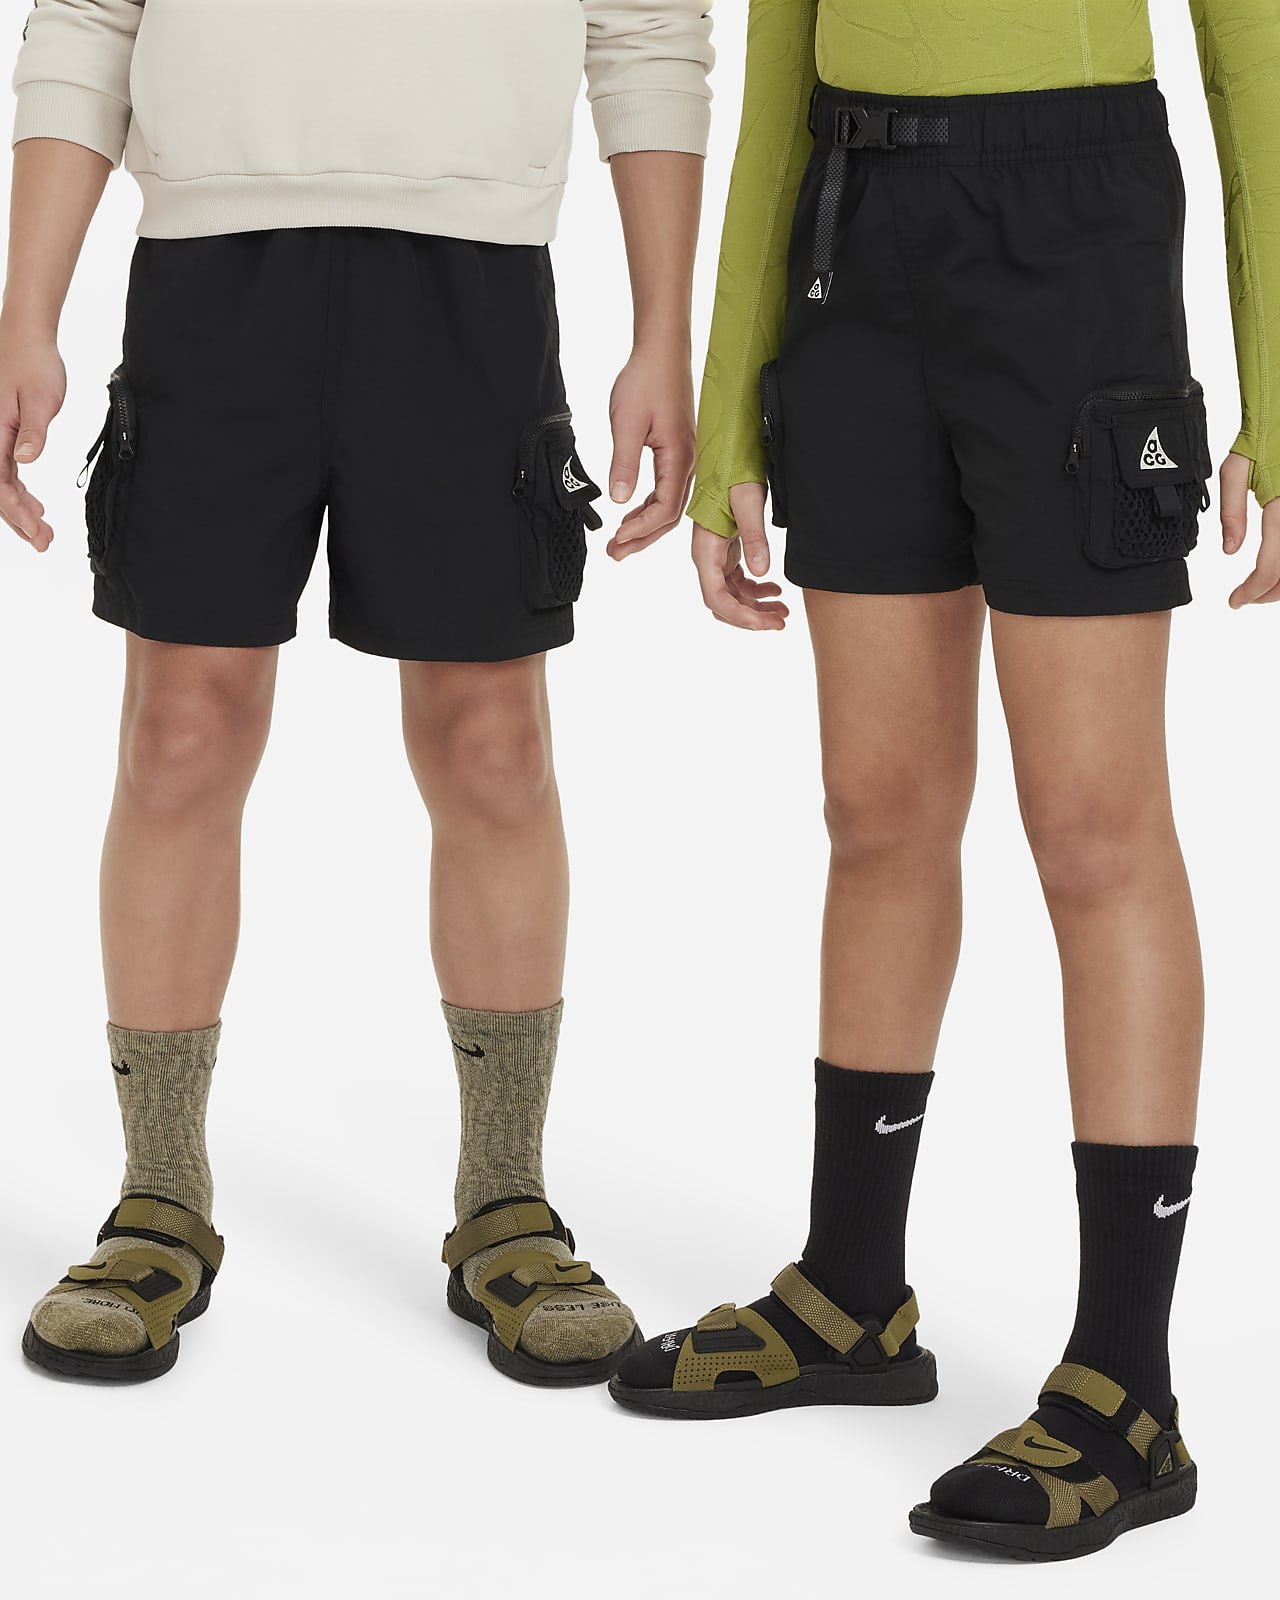 Nike ACG Pantalons curts cargo - Nen/a